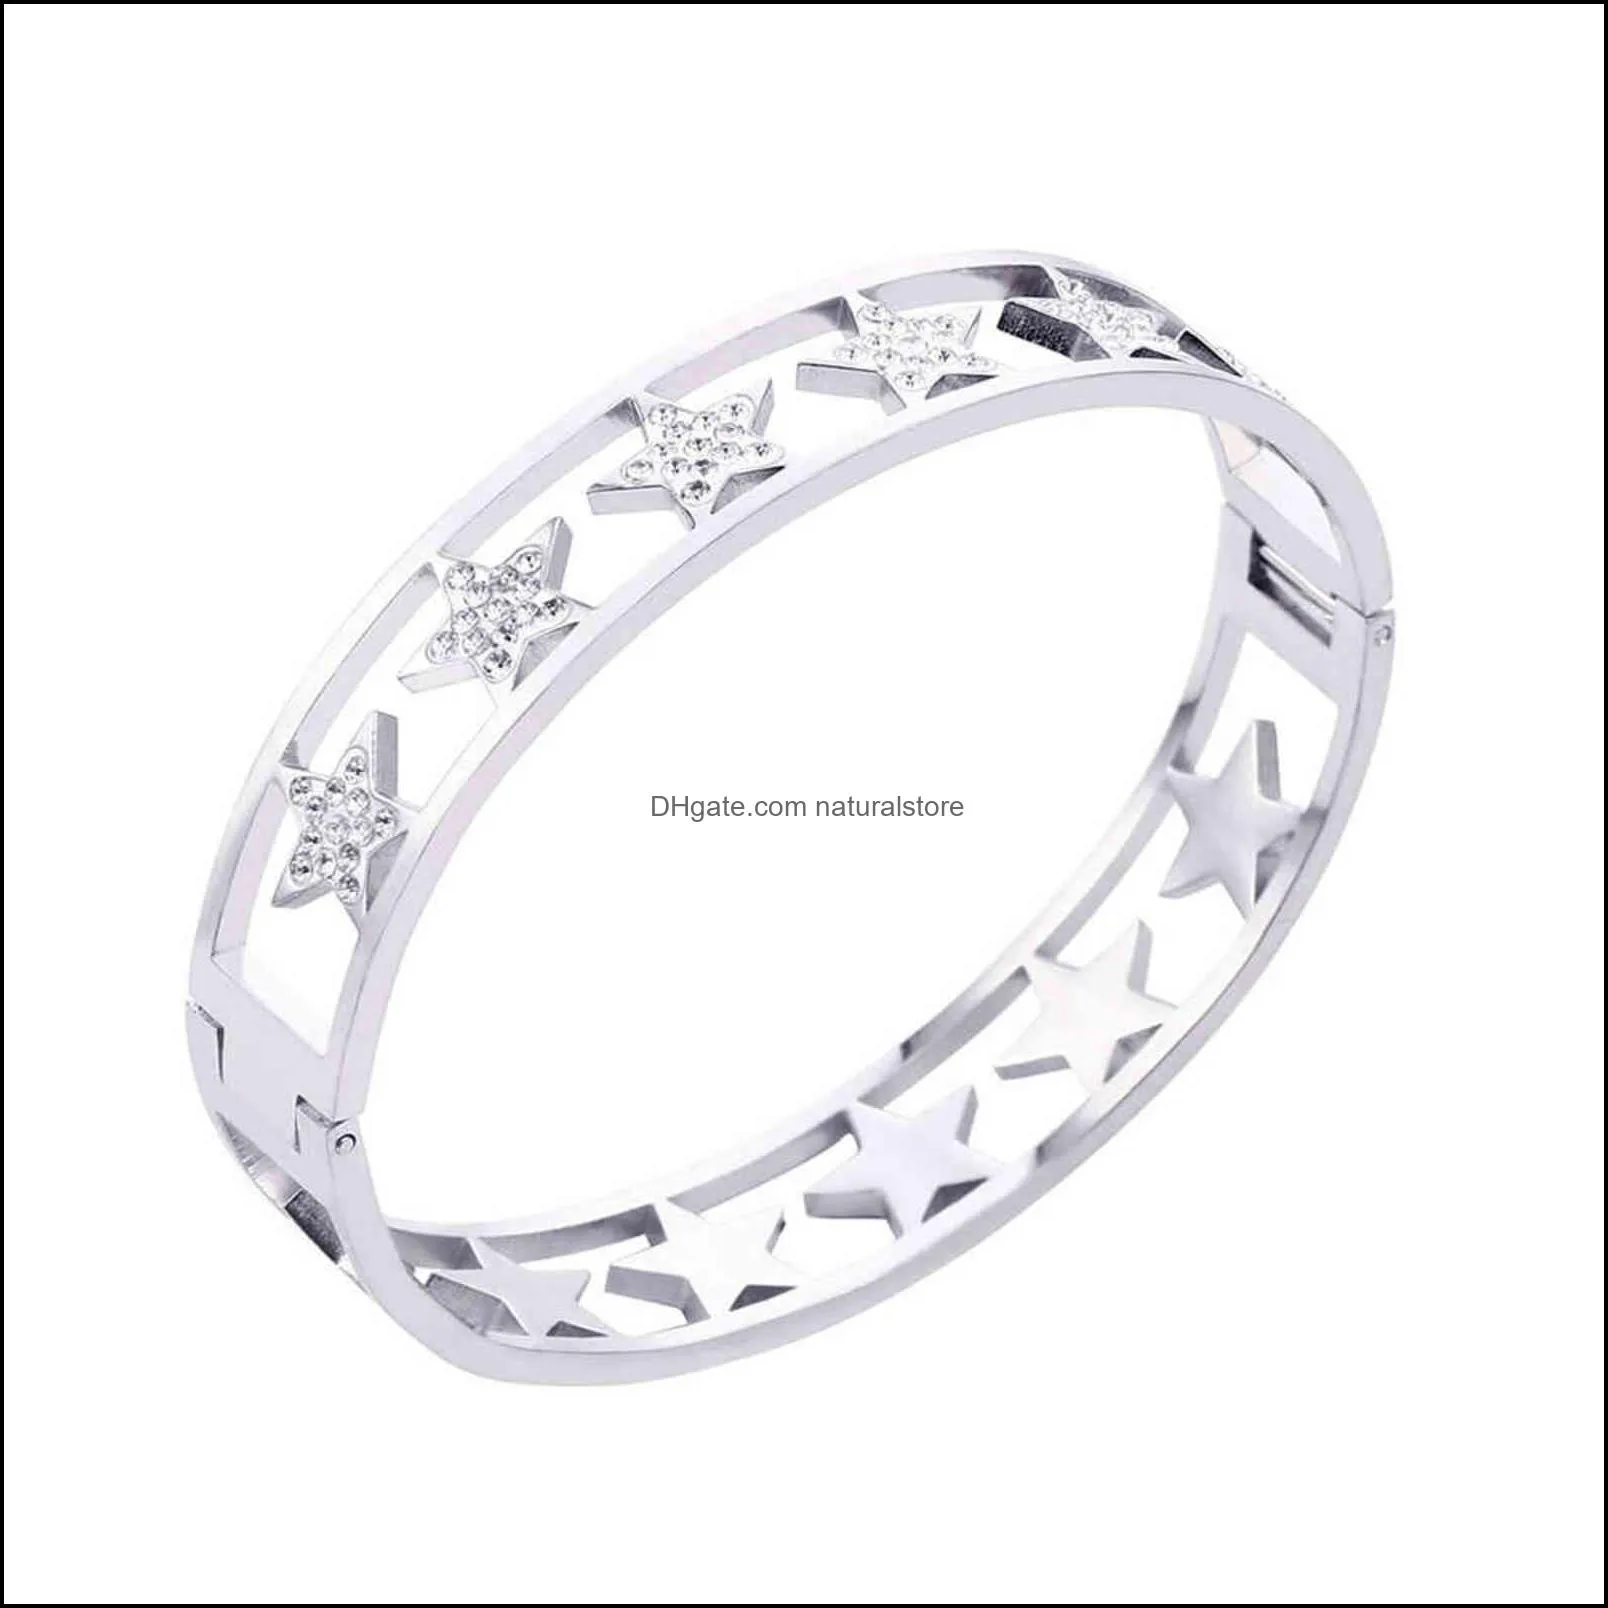 stainless steel bangles bracelet on hand for women gift jewelry rhinestone stars charm luxury hard 2021 new design